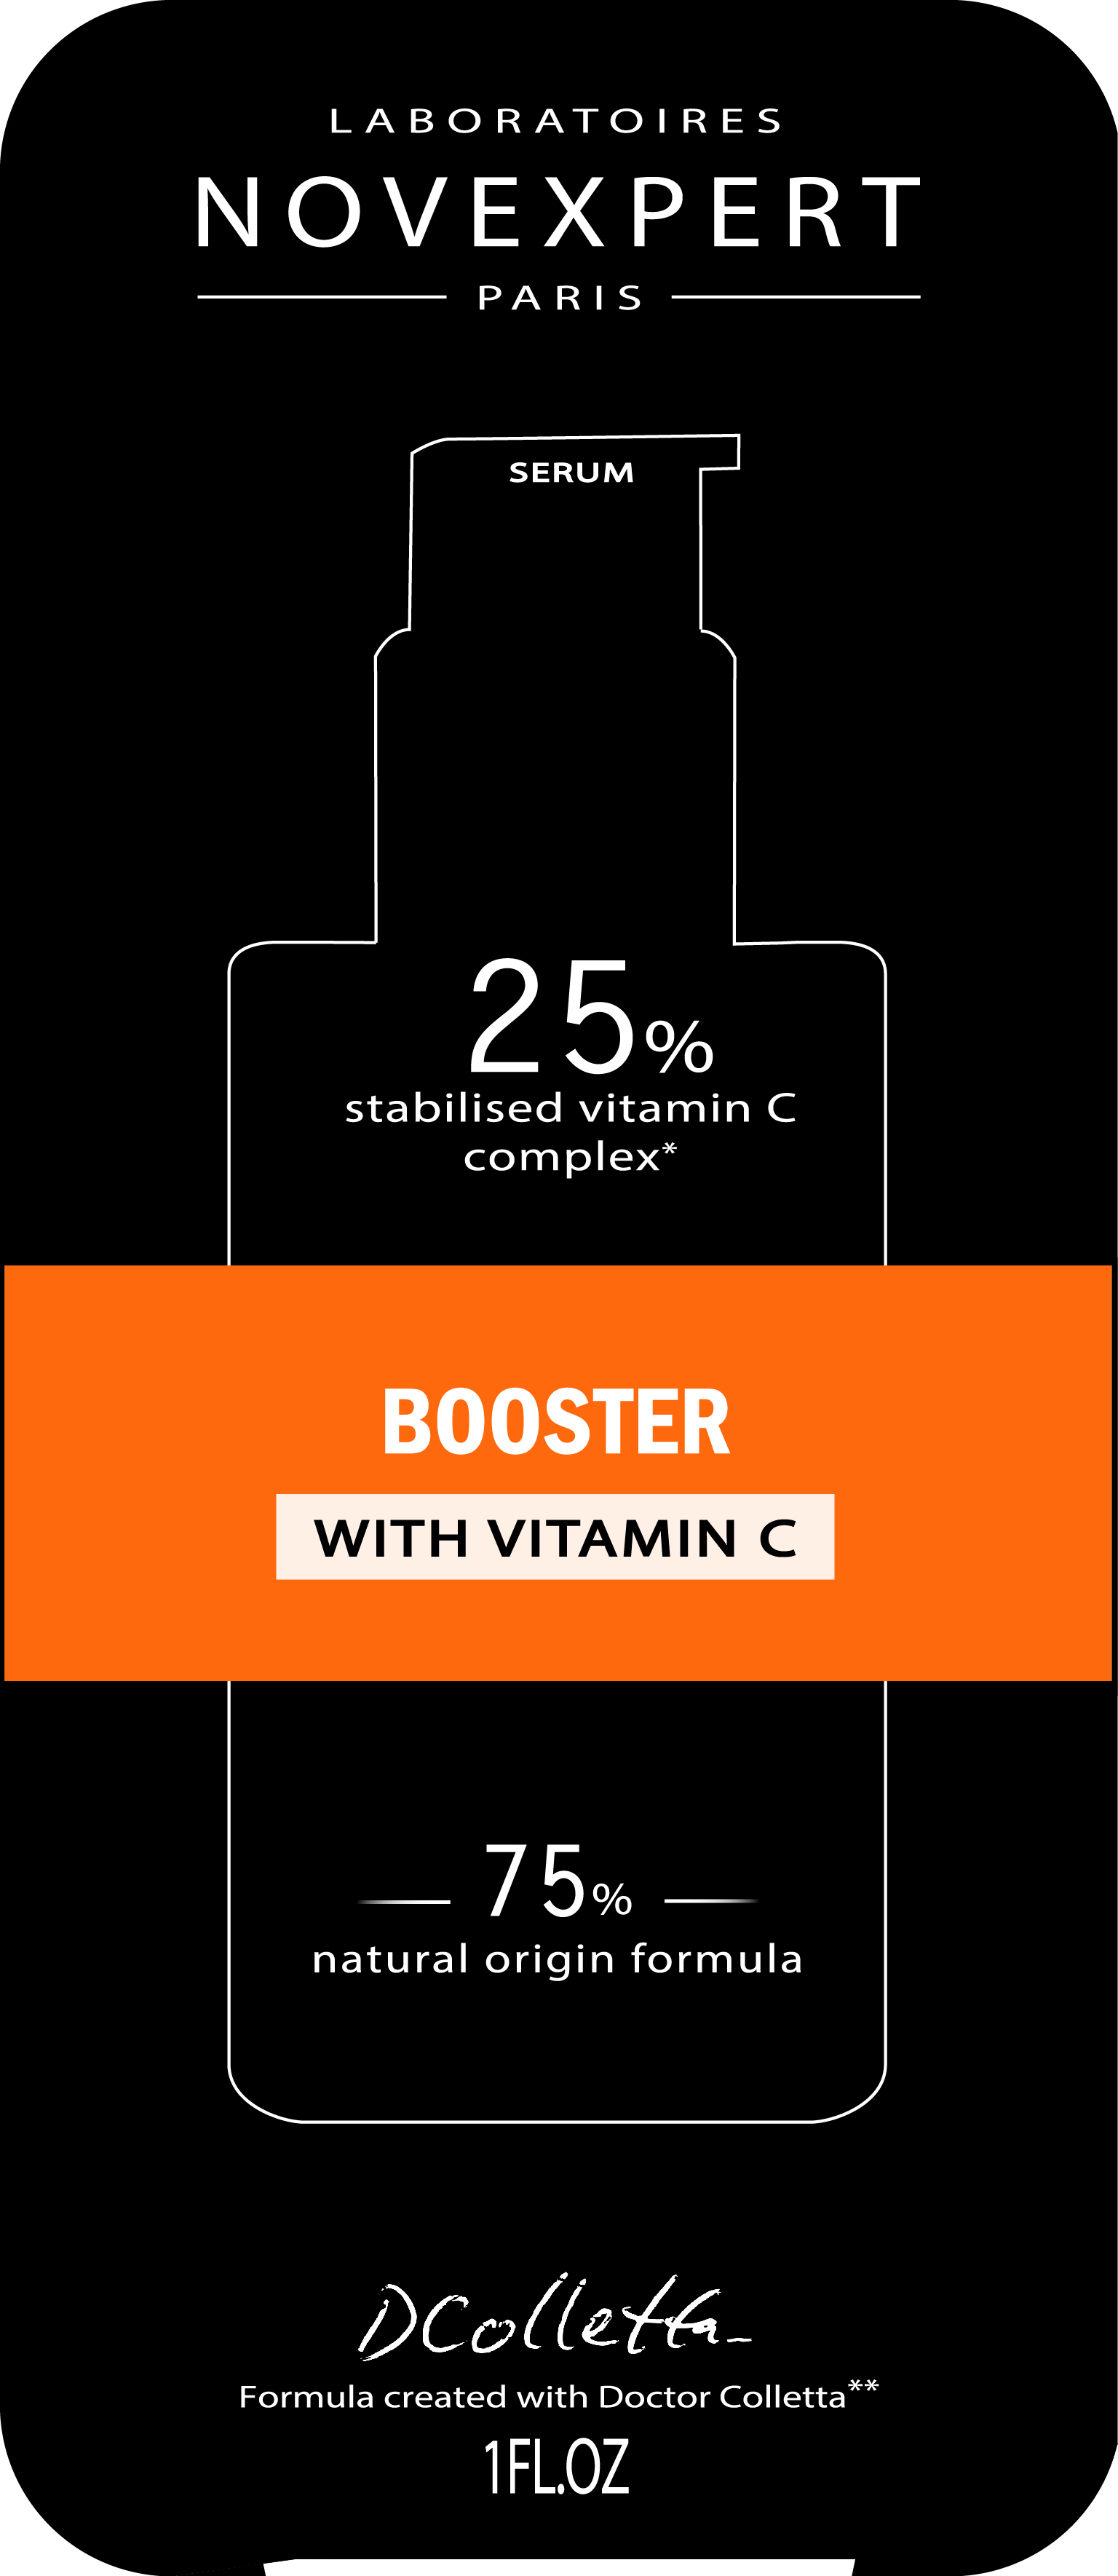 NOVEXPERT Booster Serum Vitamin C. Foto - arkib Wanista.com